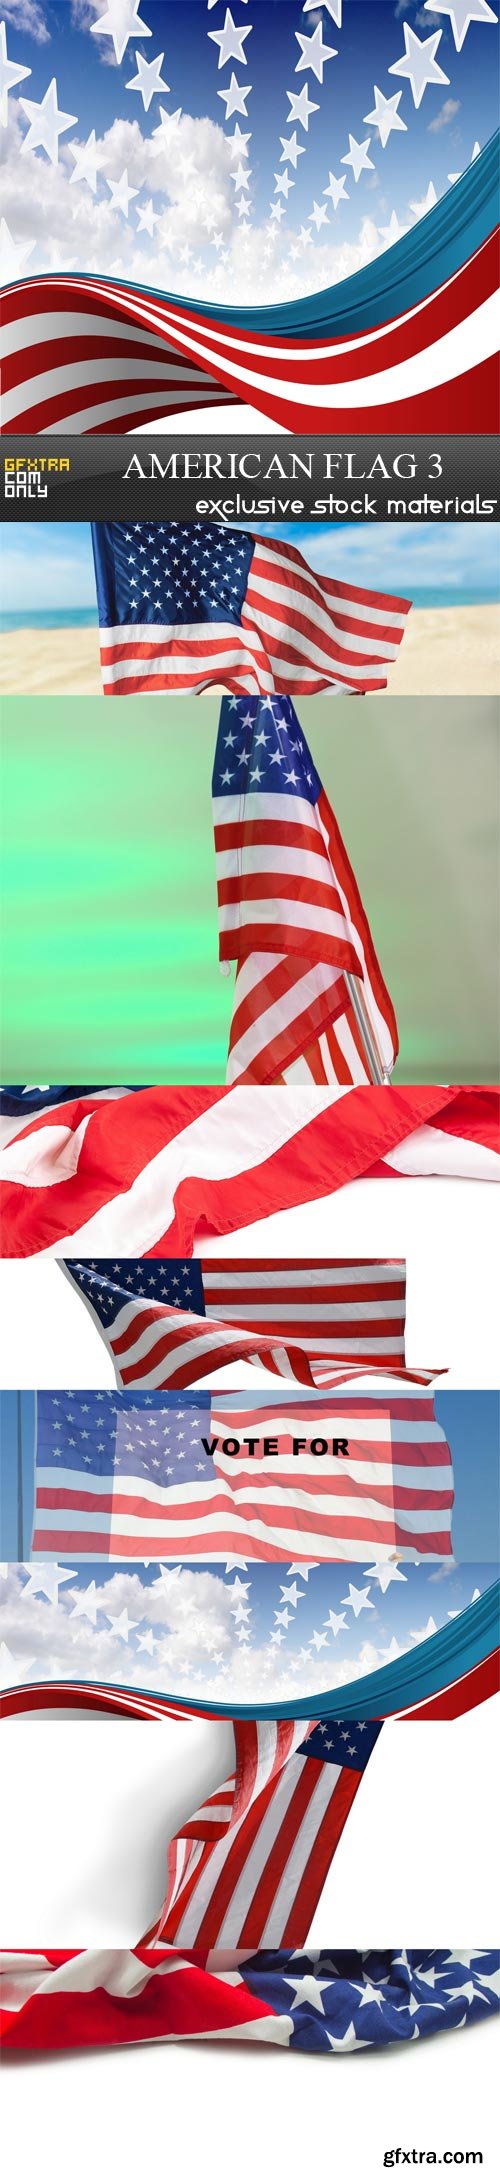 American flag 3, 8 x UHQ JPEG